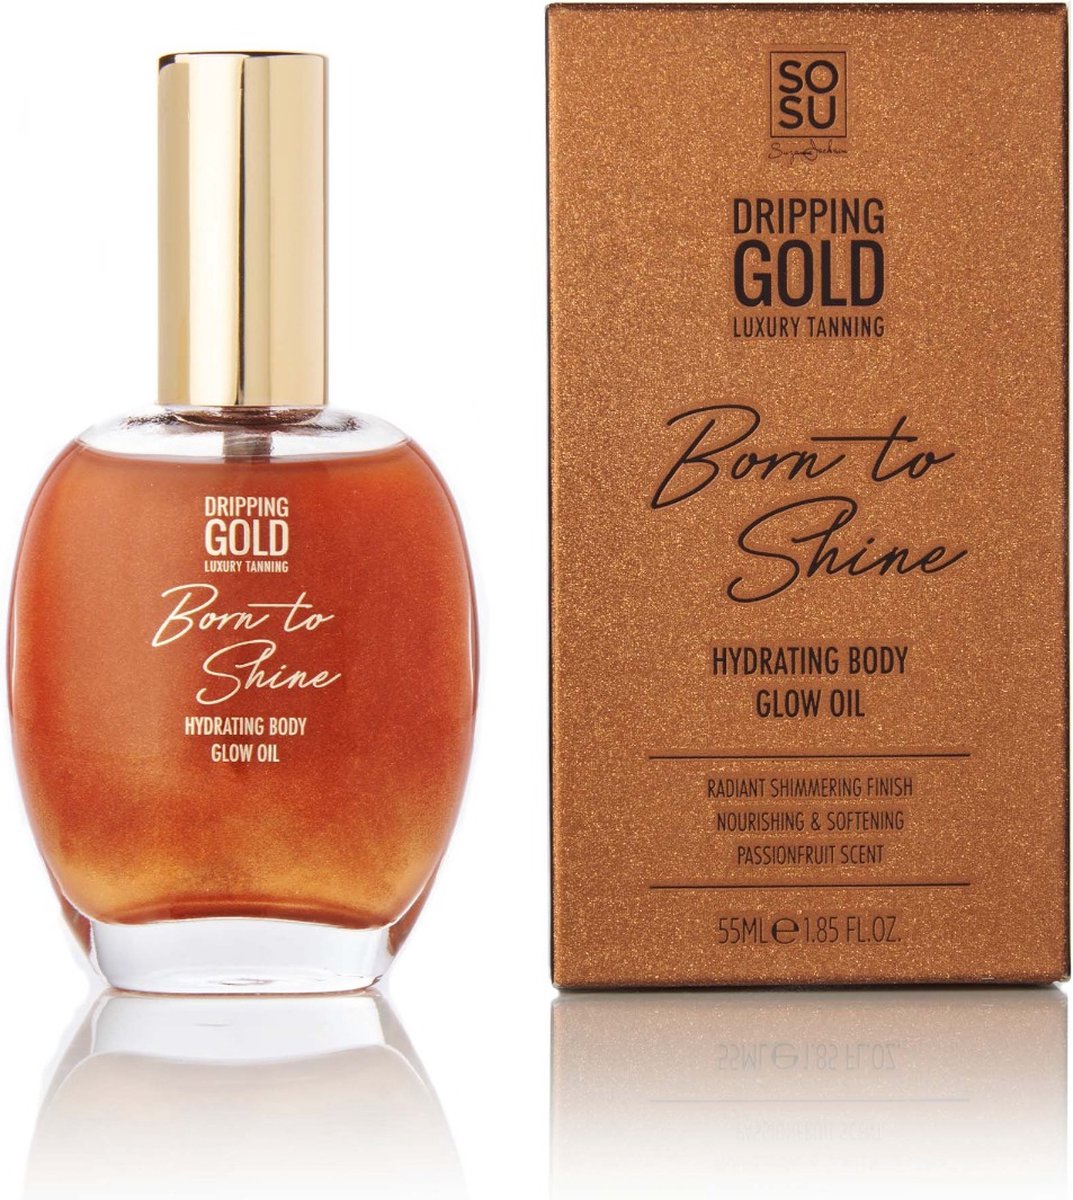 SOSU Dripping Gold Born to Shine Hydrating Body Glow Oil Bronze Glow